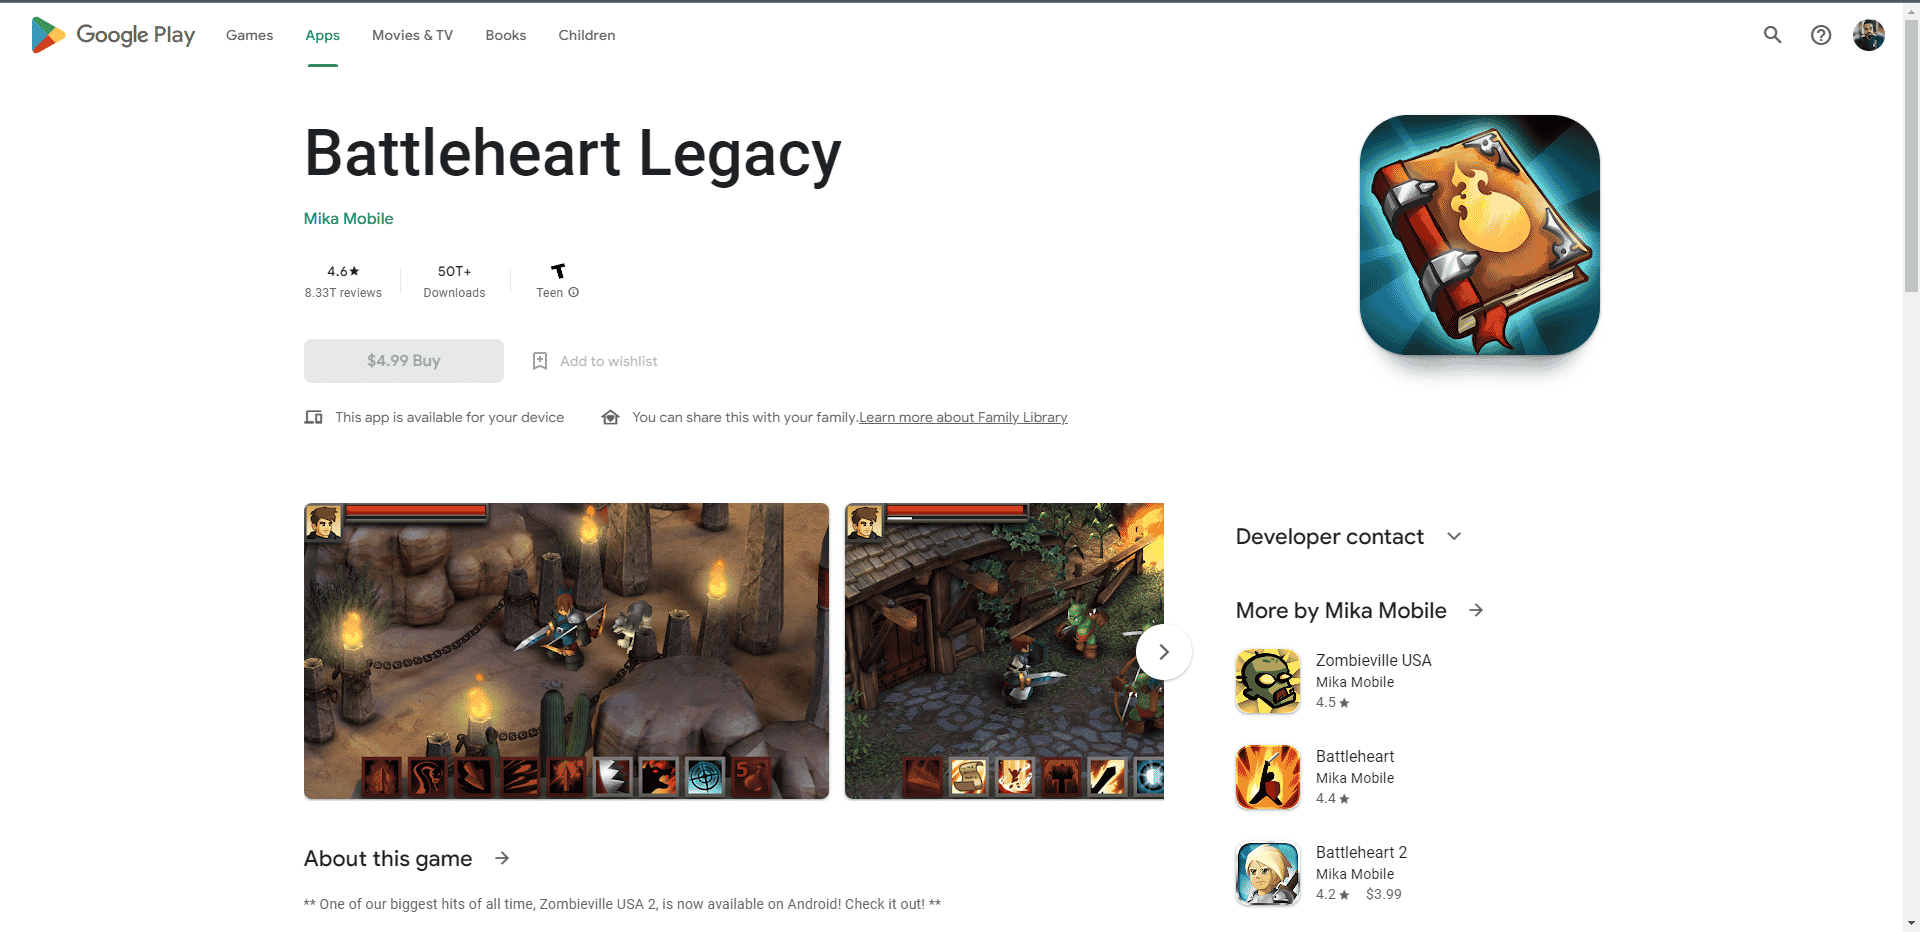 Battleheart Legacy play store webpage